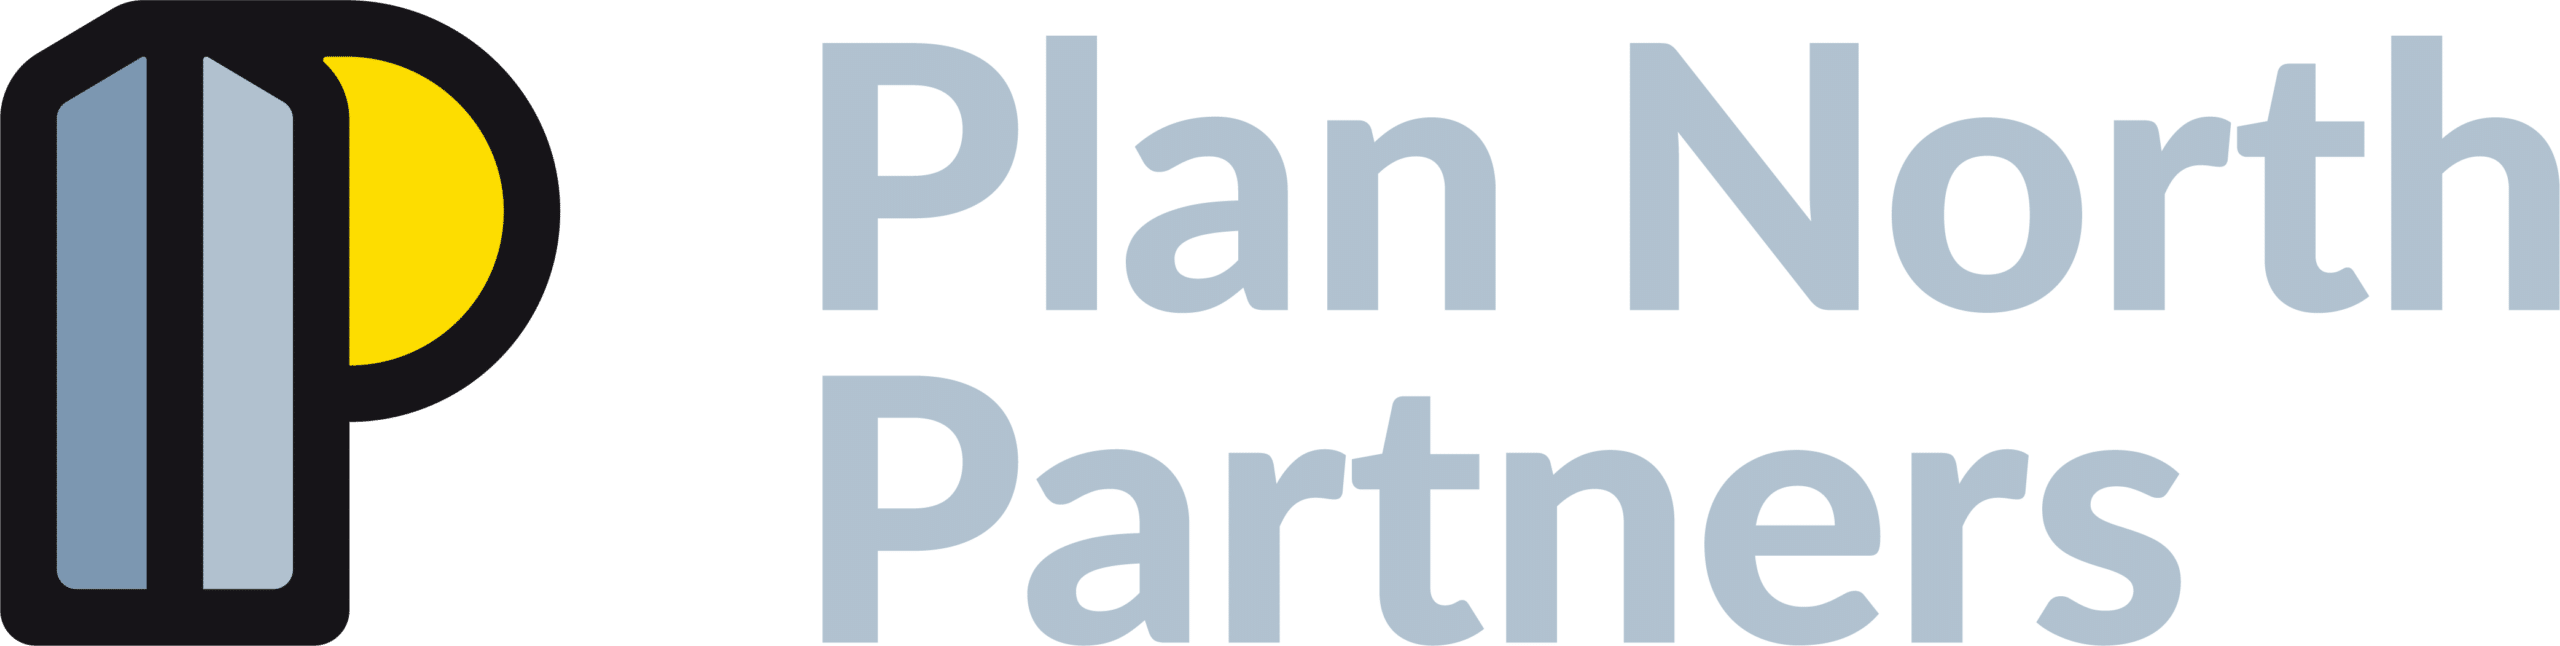 Plan North Partners